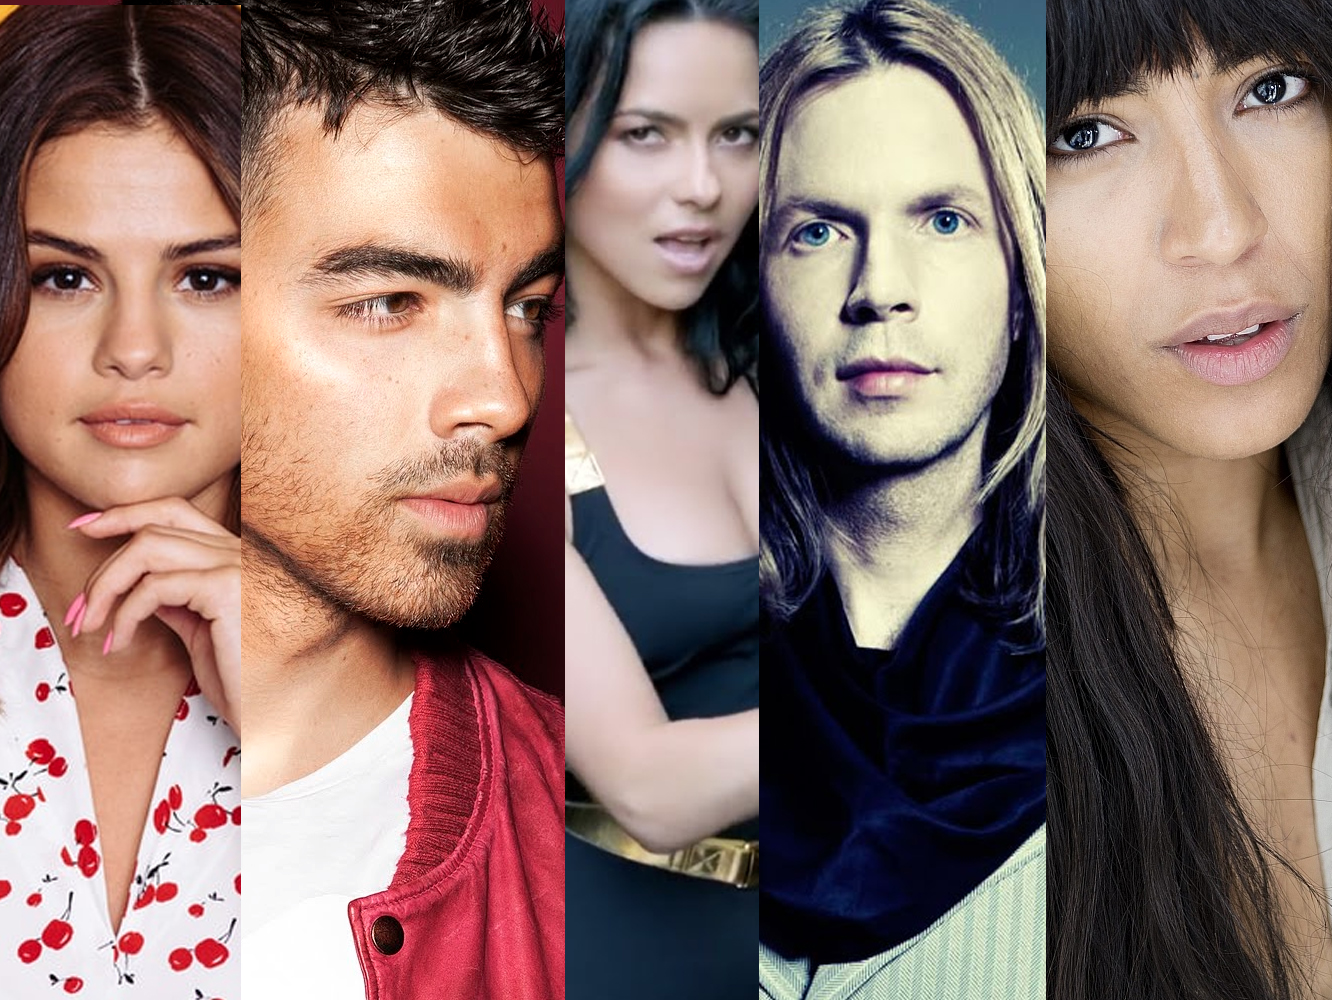  Music Fridays | Lo nuevo de Loreen, Juan Magán, Beck, The Killers o INNA